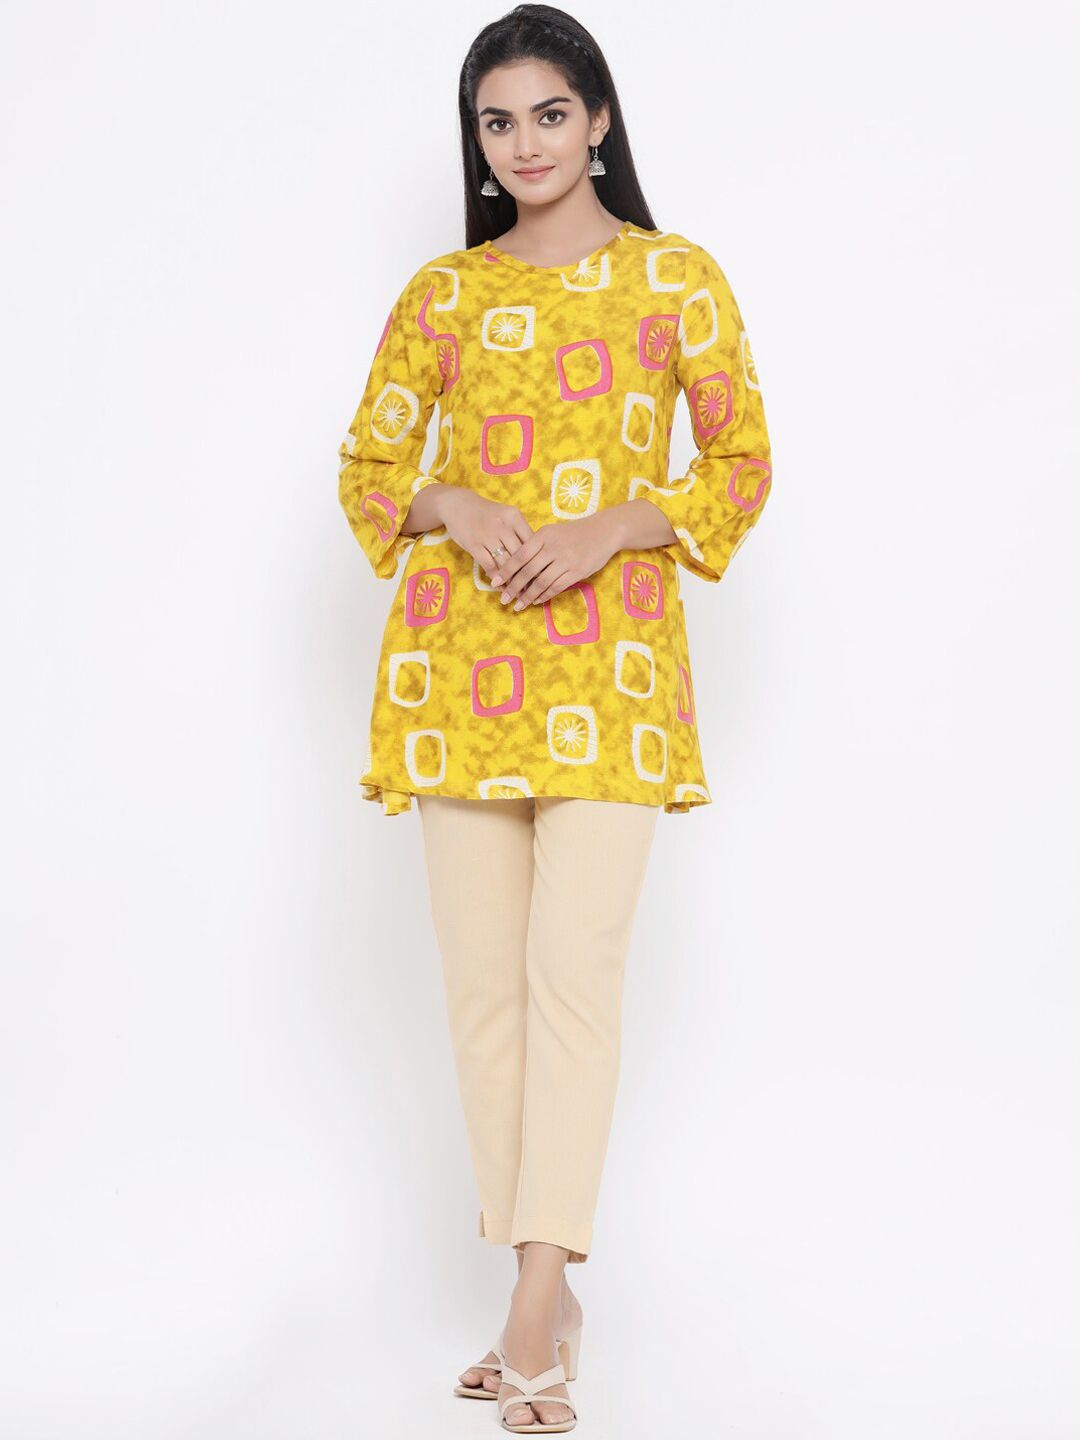 Fabriko Women Yellow & Beige Printed Top with Trousers Price in India